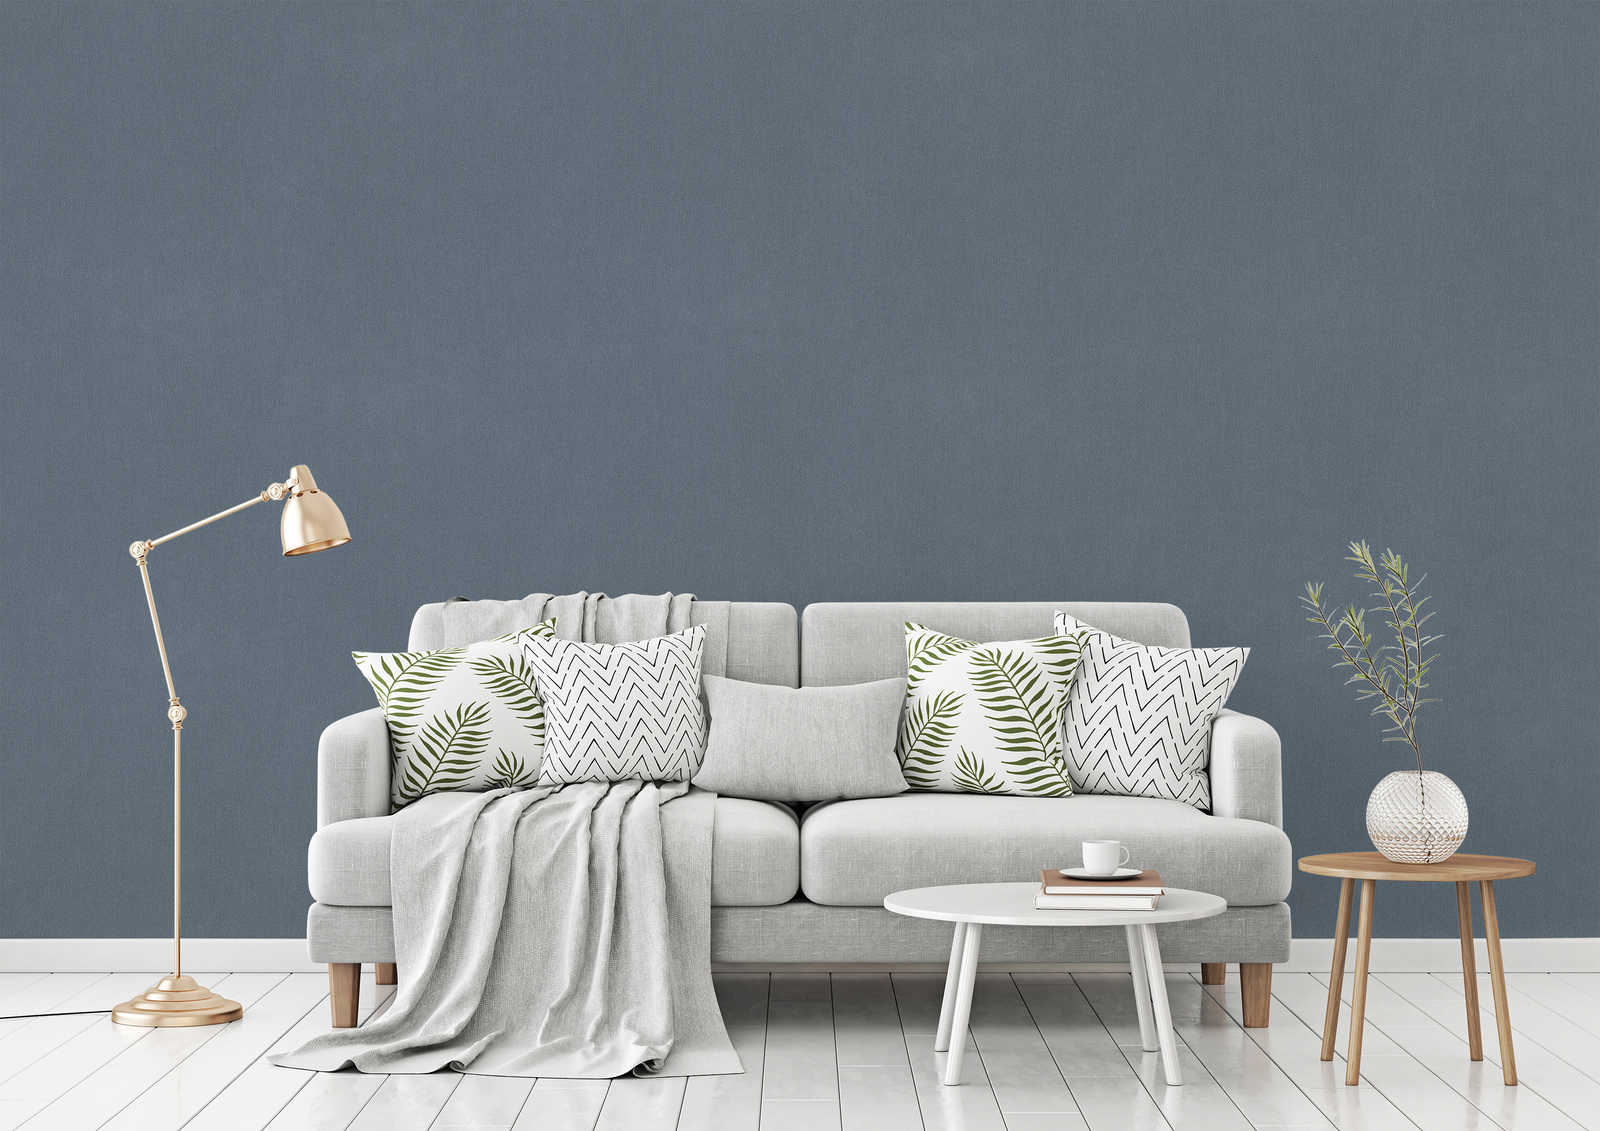             Dark grey wallpaper non-woven, monochrome with colour hatching
        